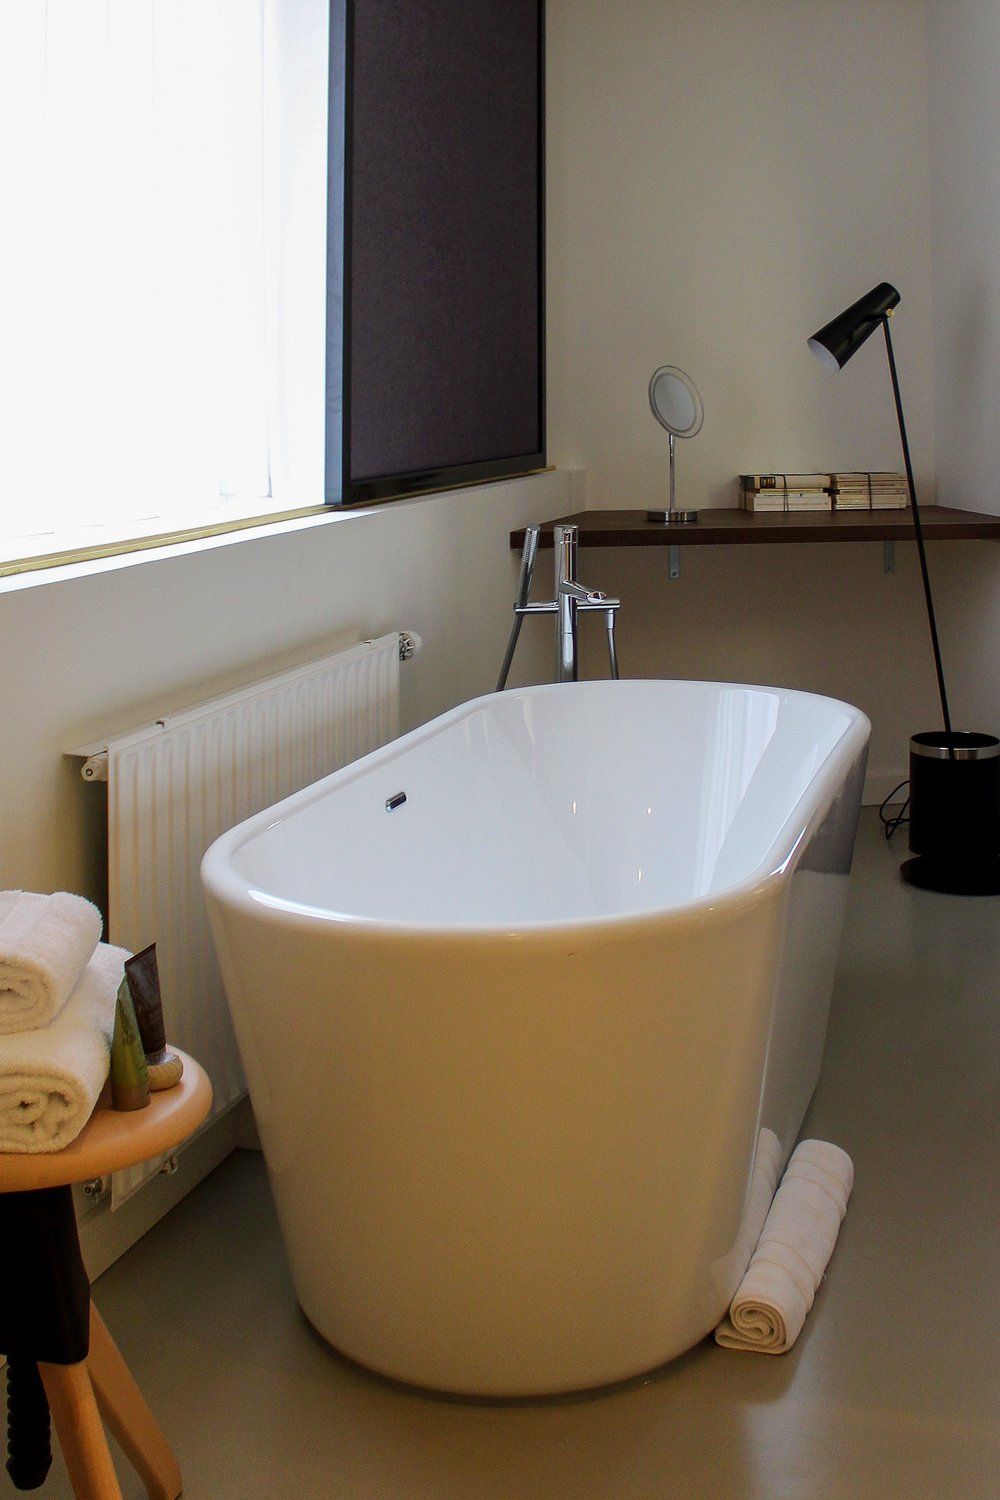 Designer bathtub at the Printer Suite of the Ink Hotel Amsterdam